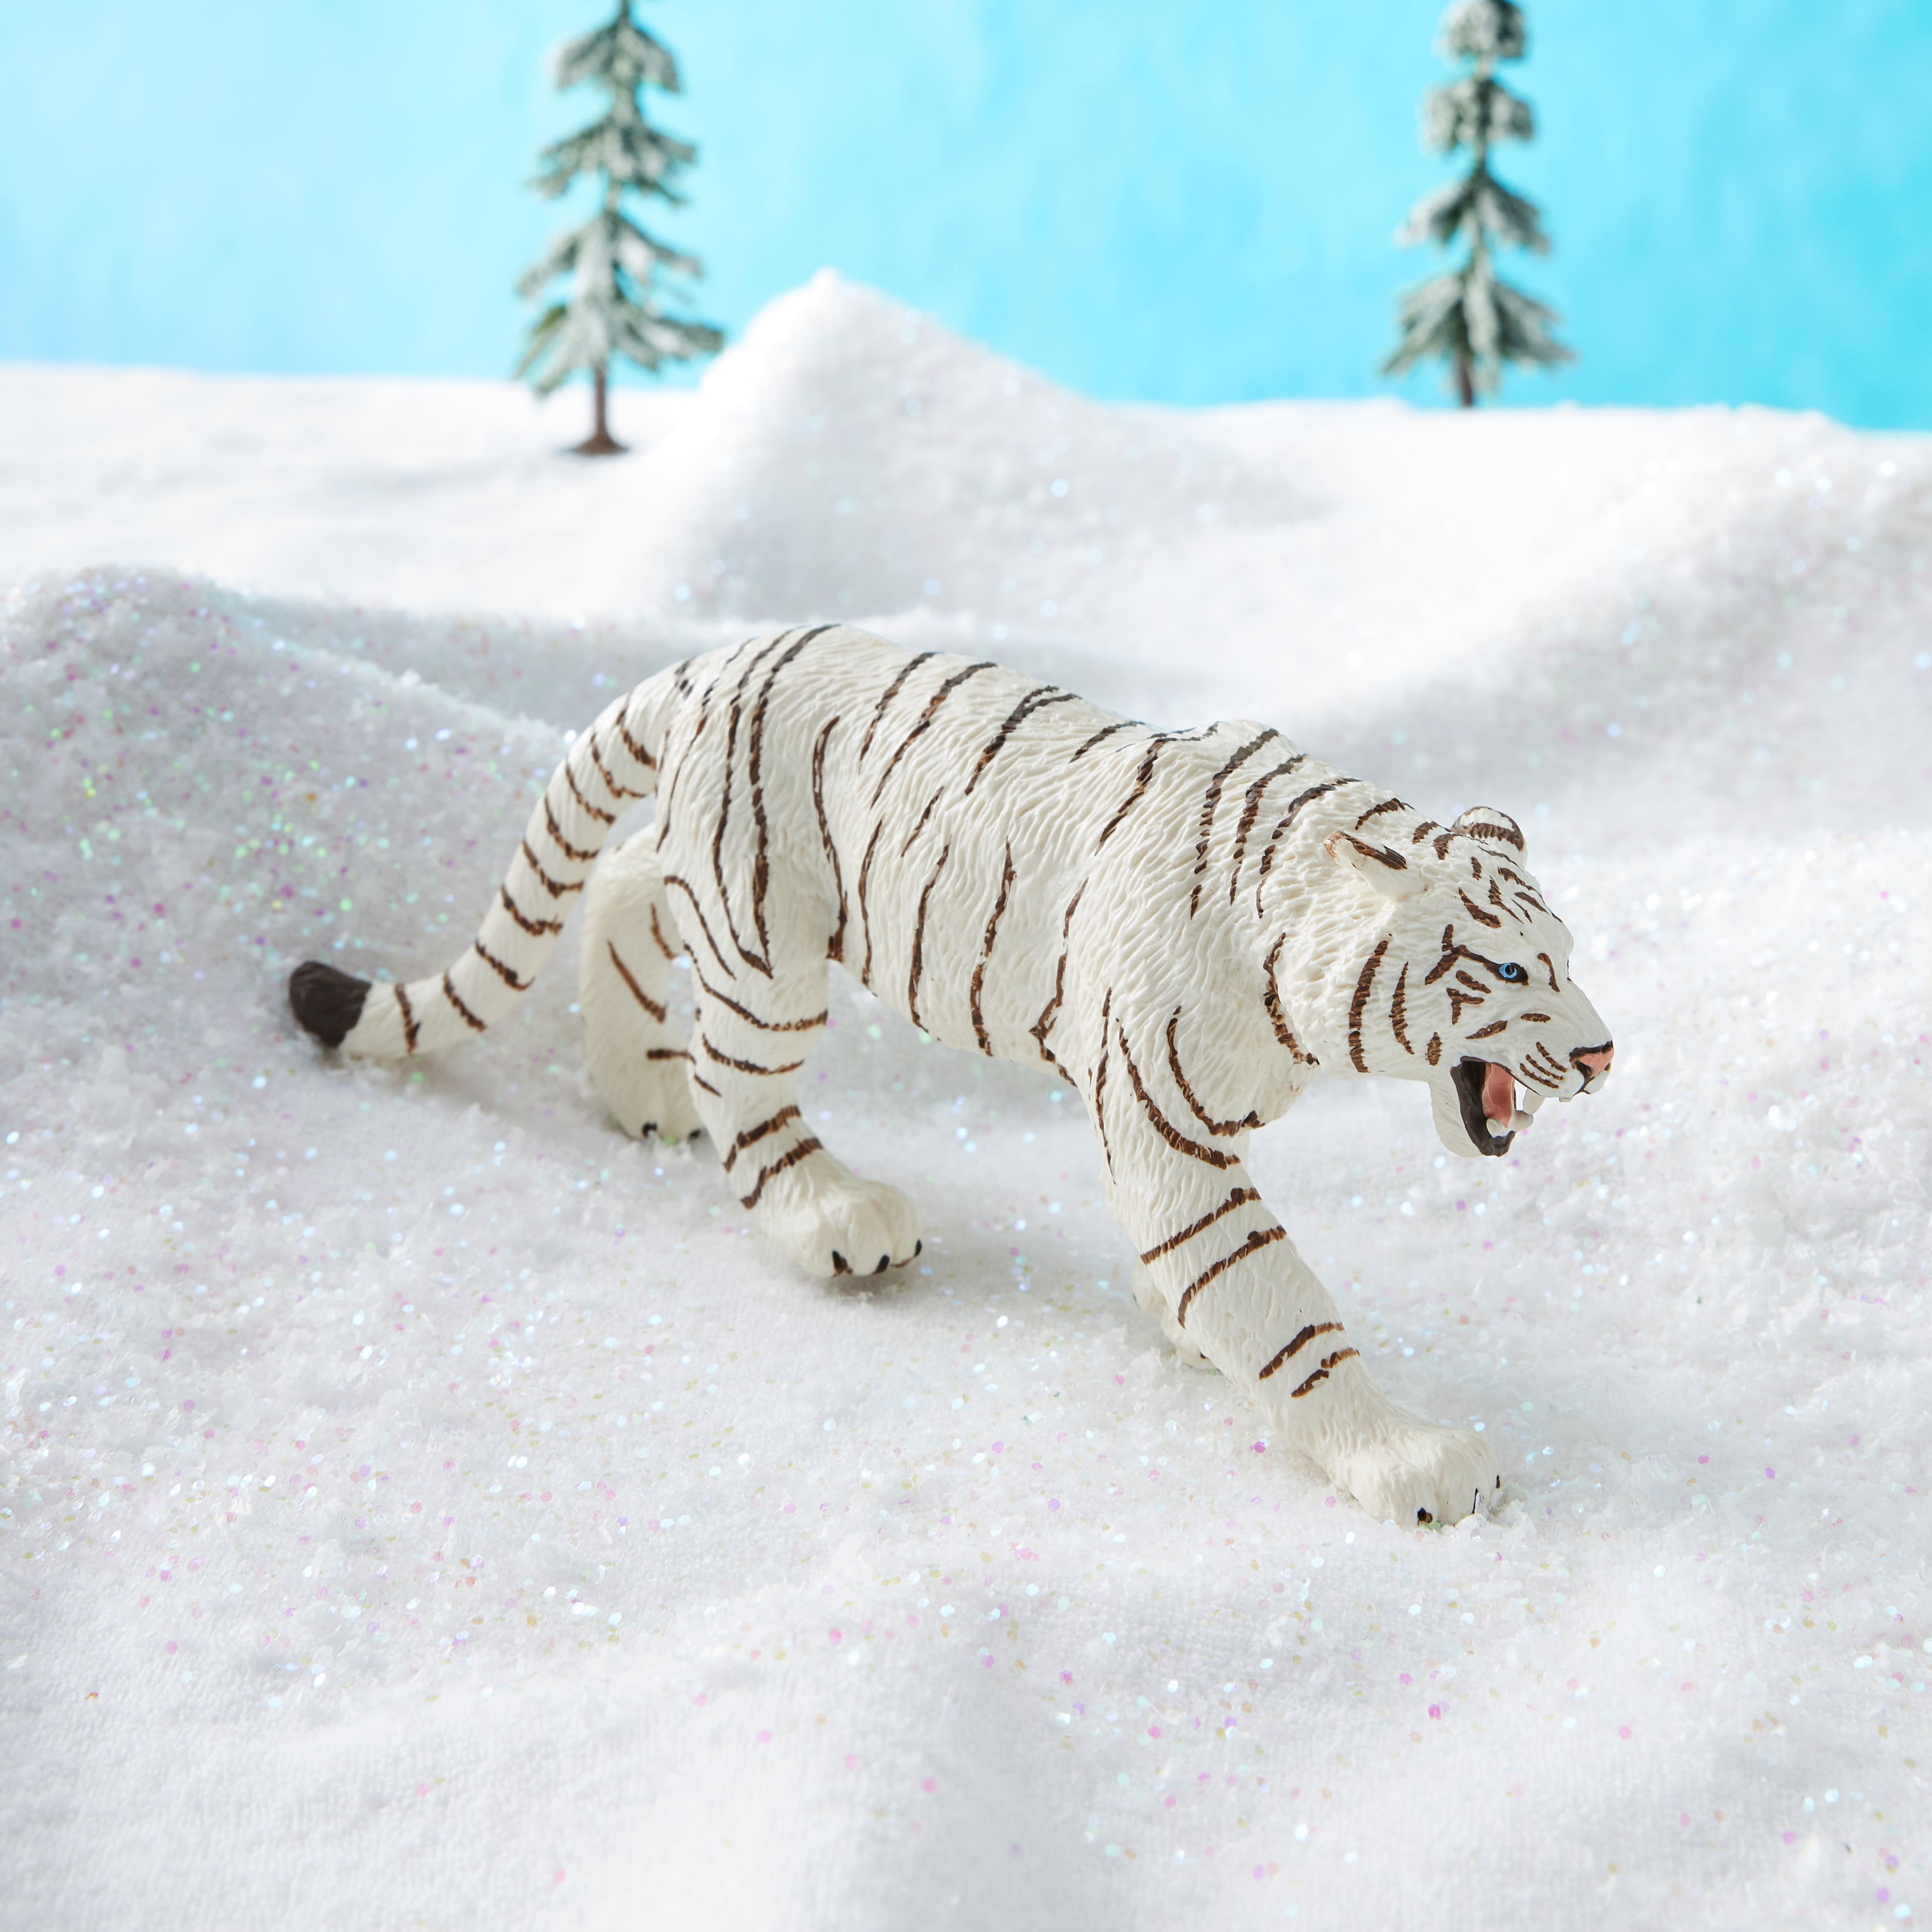 Safari Ltd® White Bengal Tiger